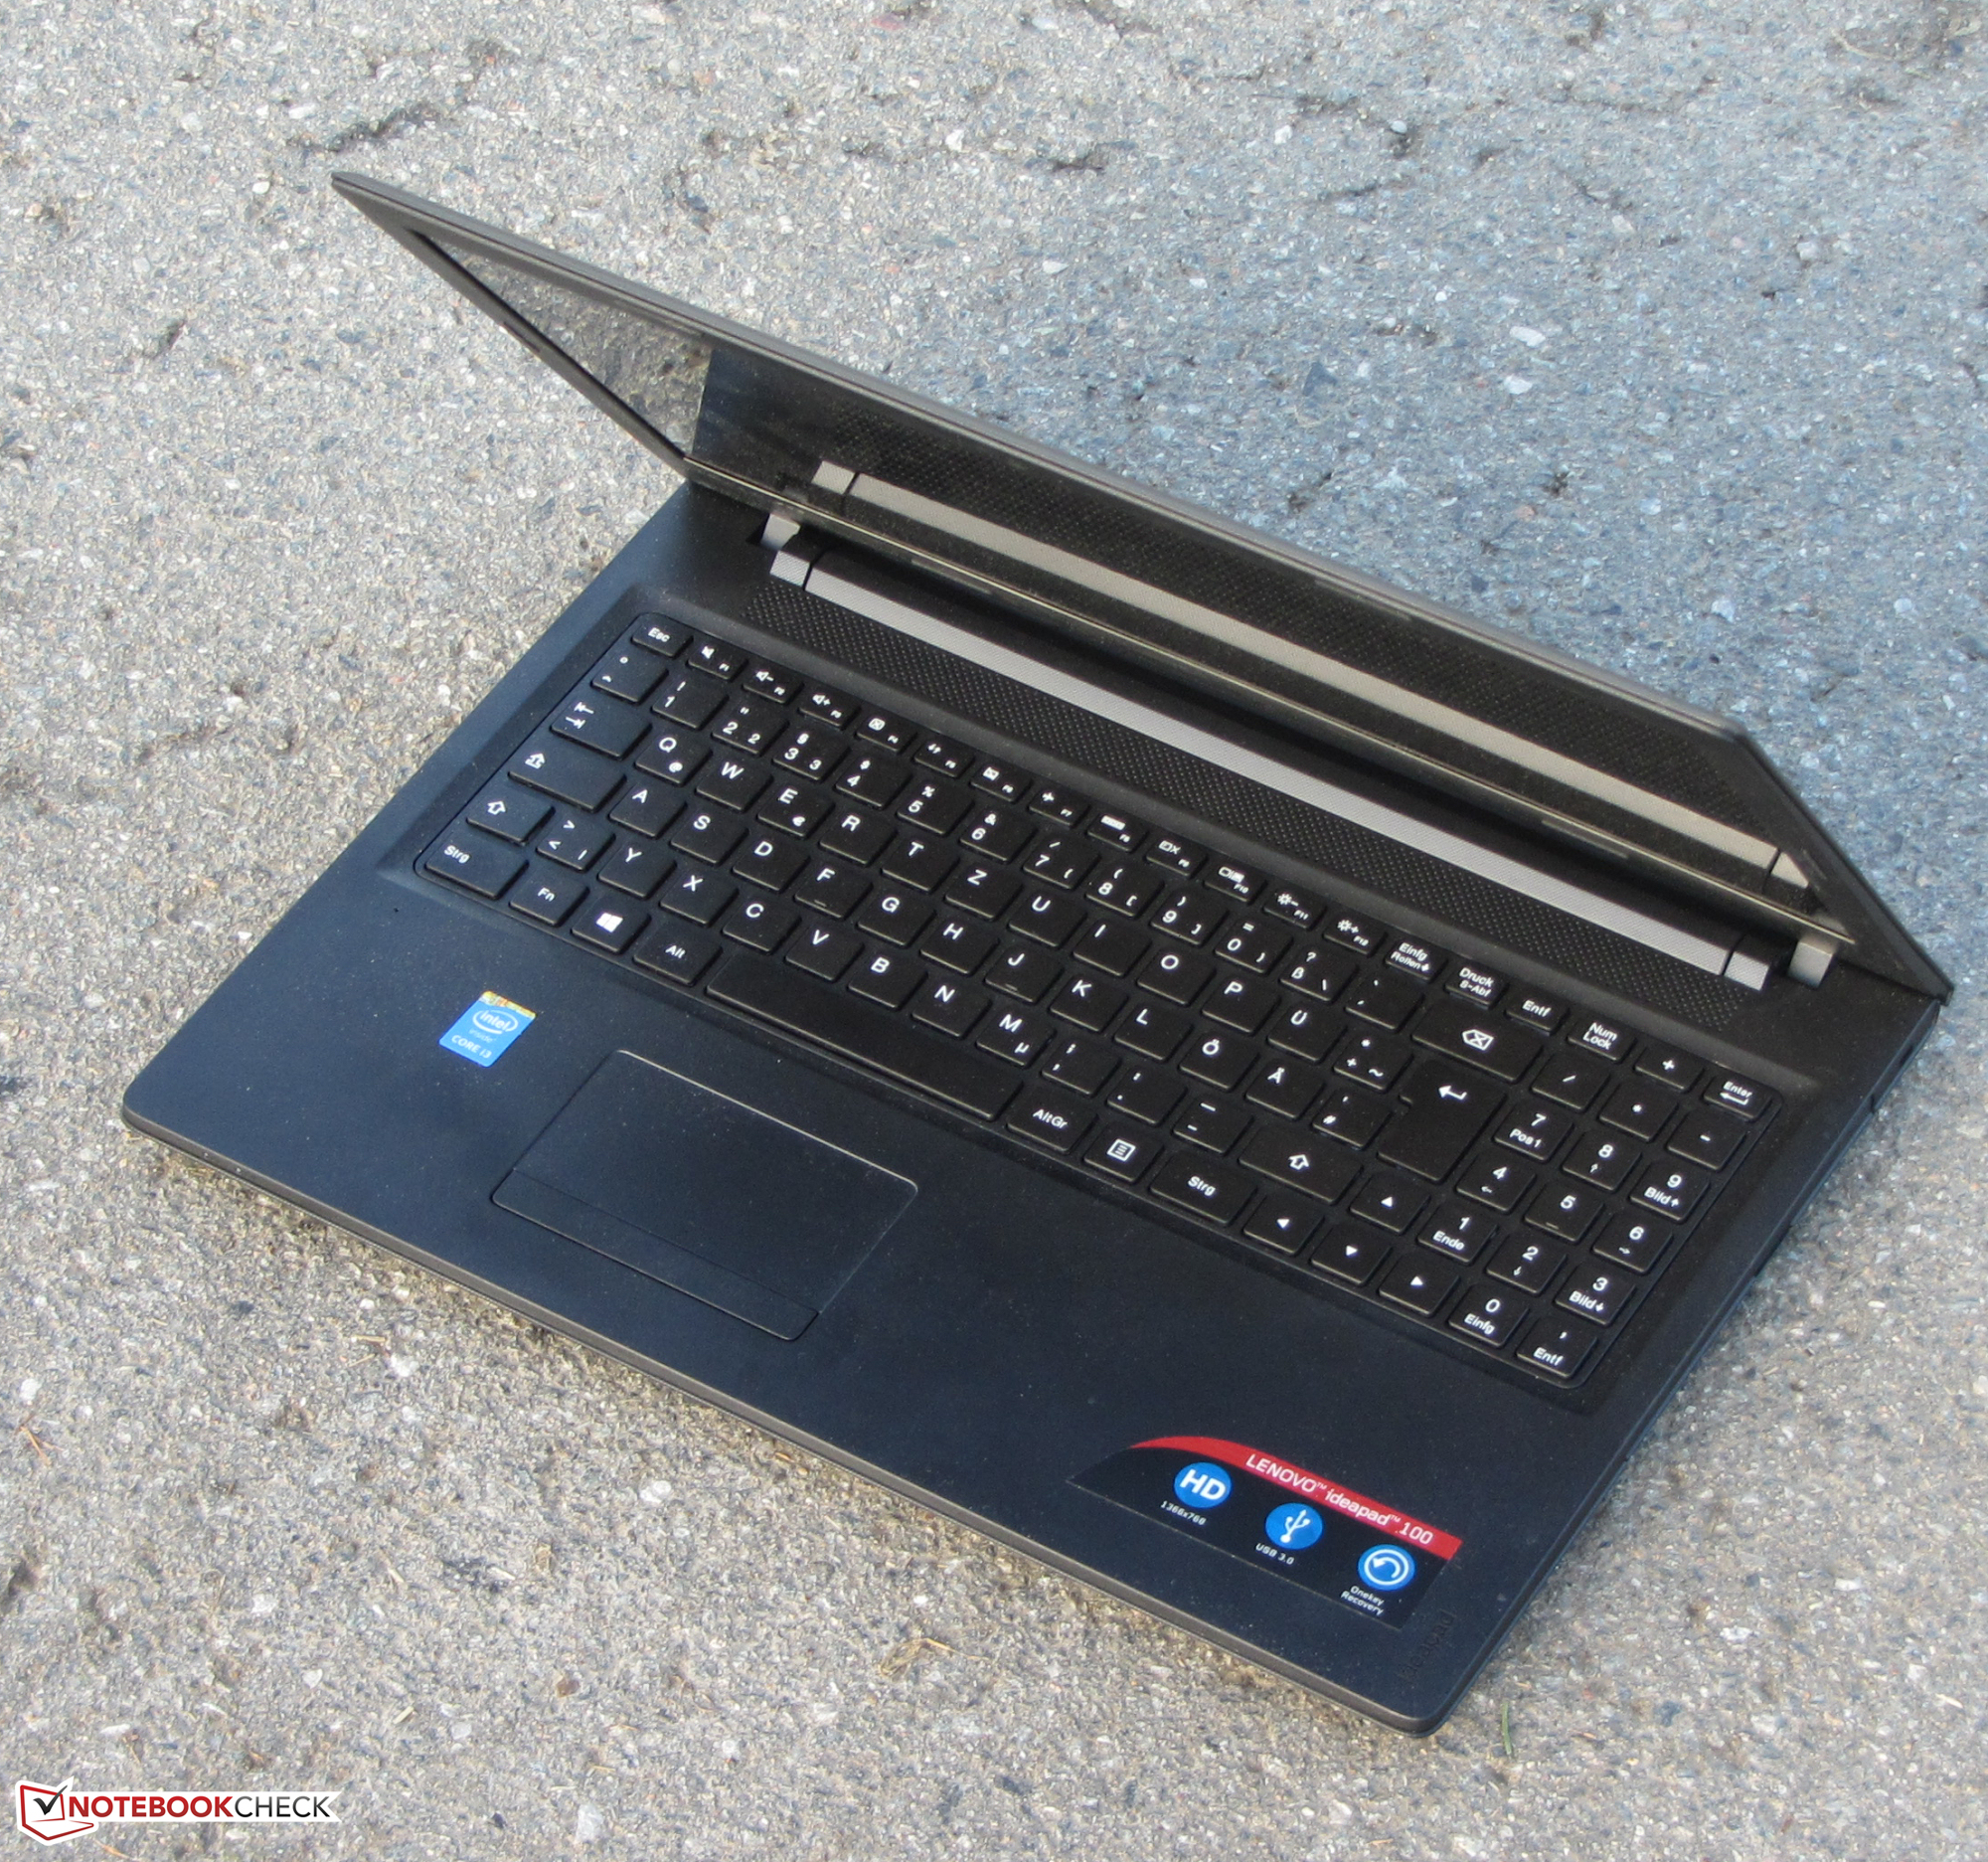 Lenovo IdeaPad 305-15ibd Core i3-5005u 8gb 1tb HDD Blue Windows 0 Laptop 